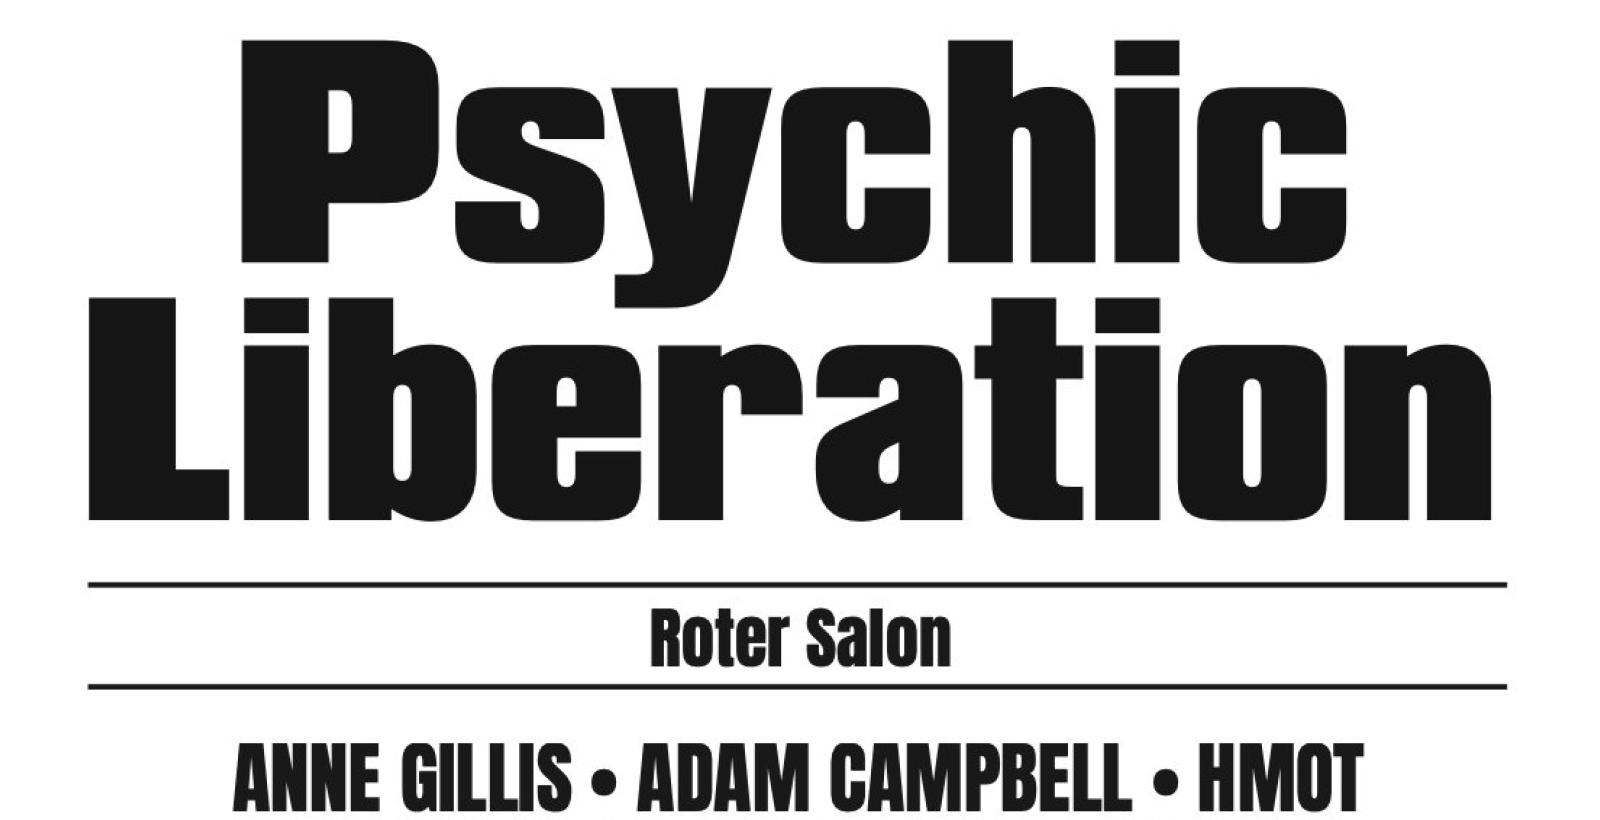 Psychic Liberation Nights Plakat